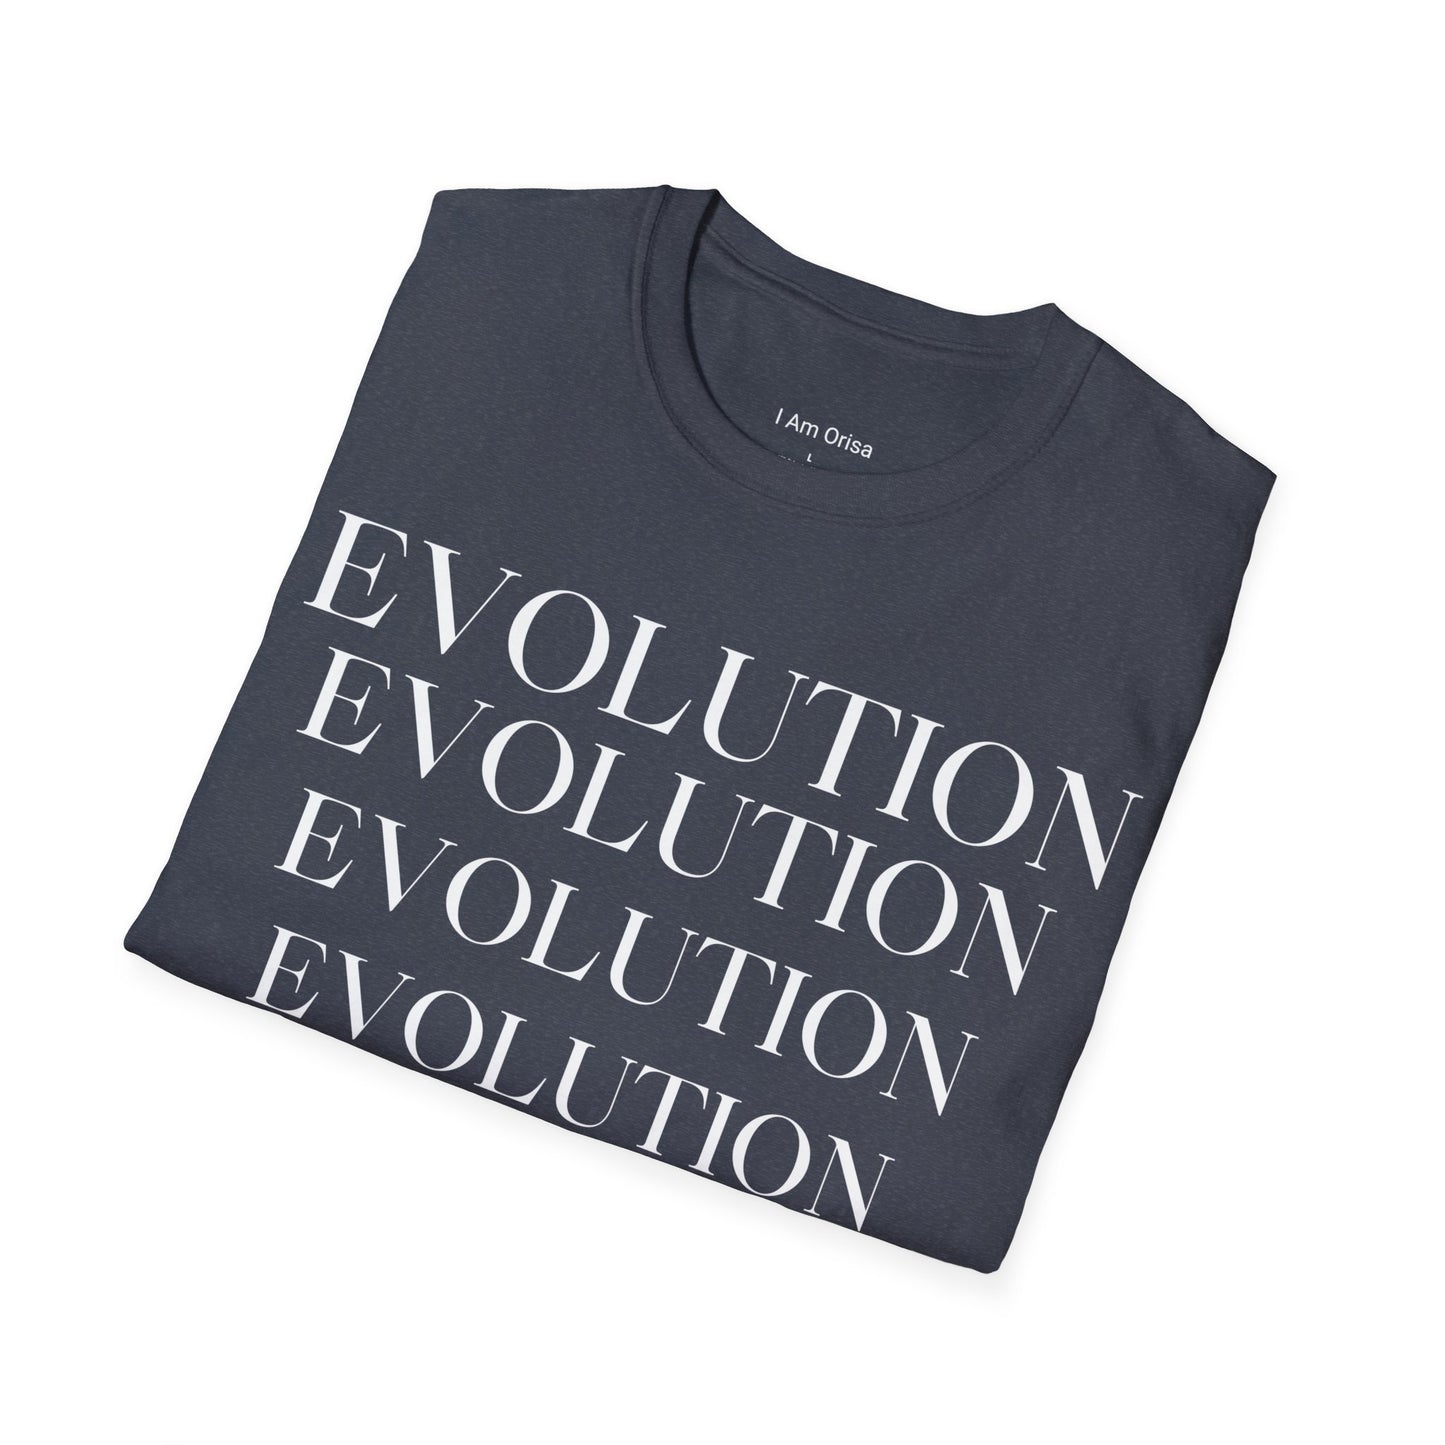 Evolution Unisex Softstyle T-Shirt